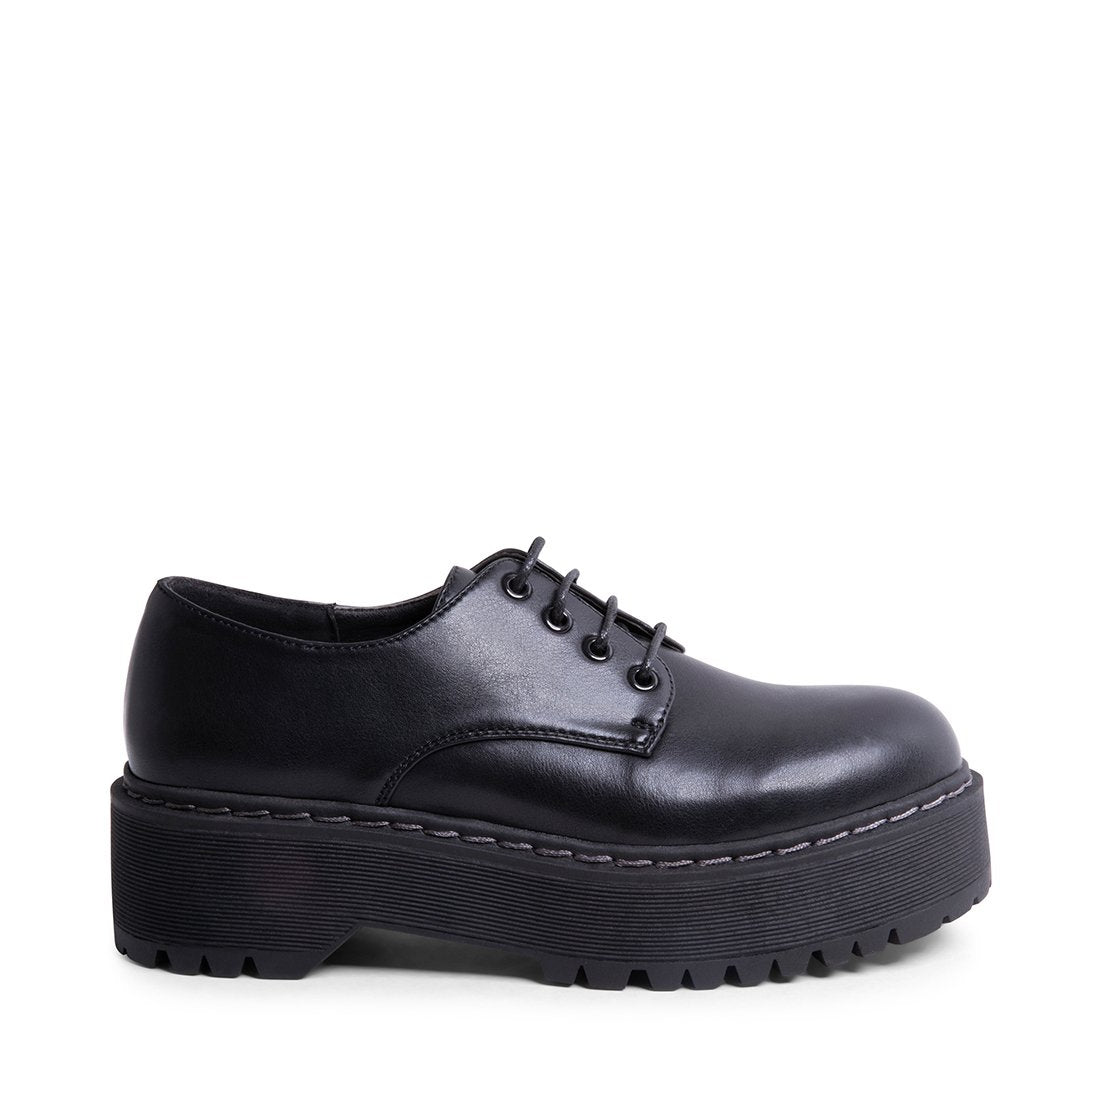 CARRINE Black Leather Women's Loafers  Women's Designer Loafers – Steve  Madden Canada